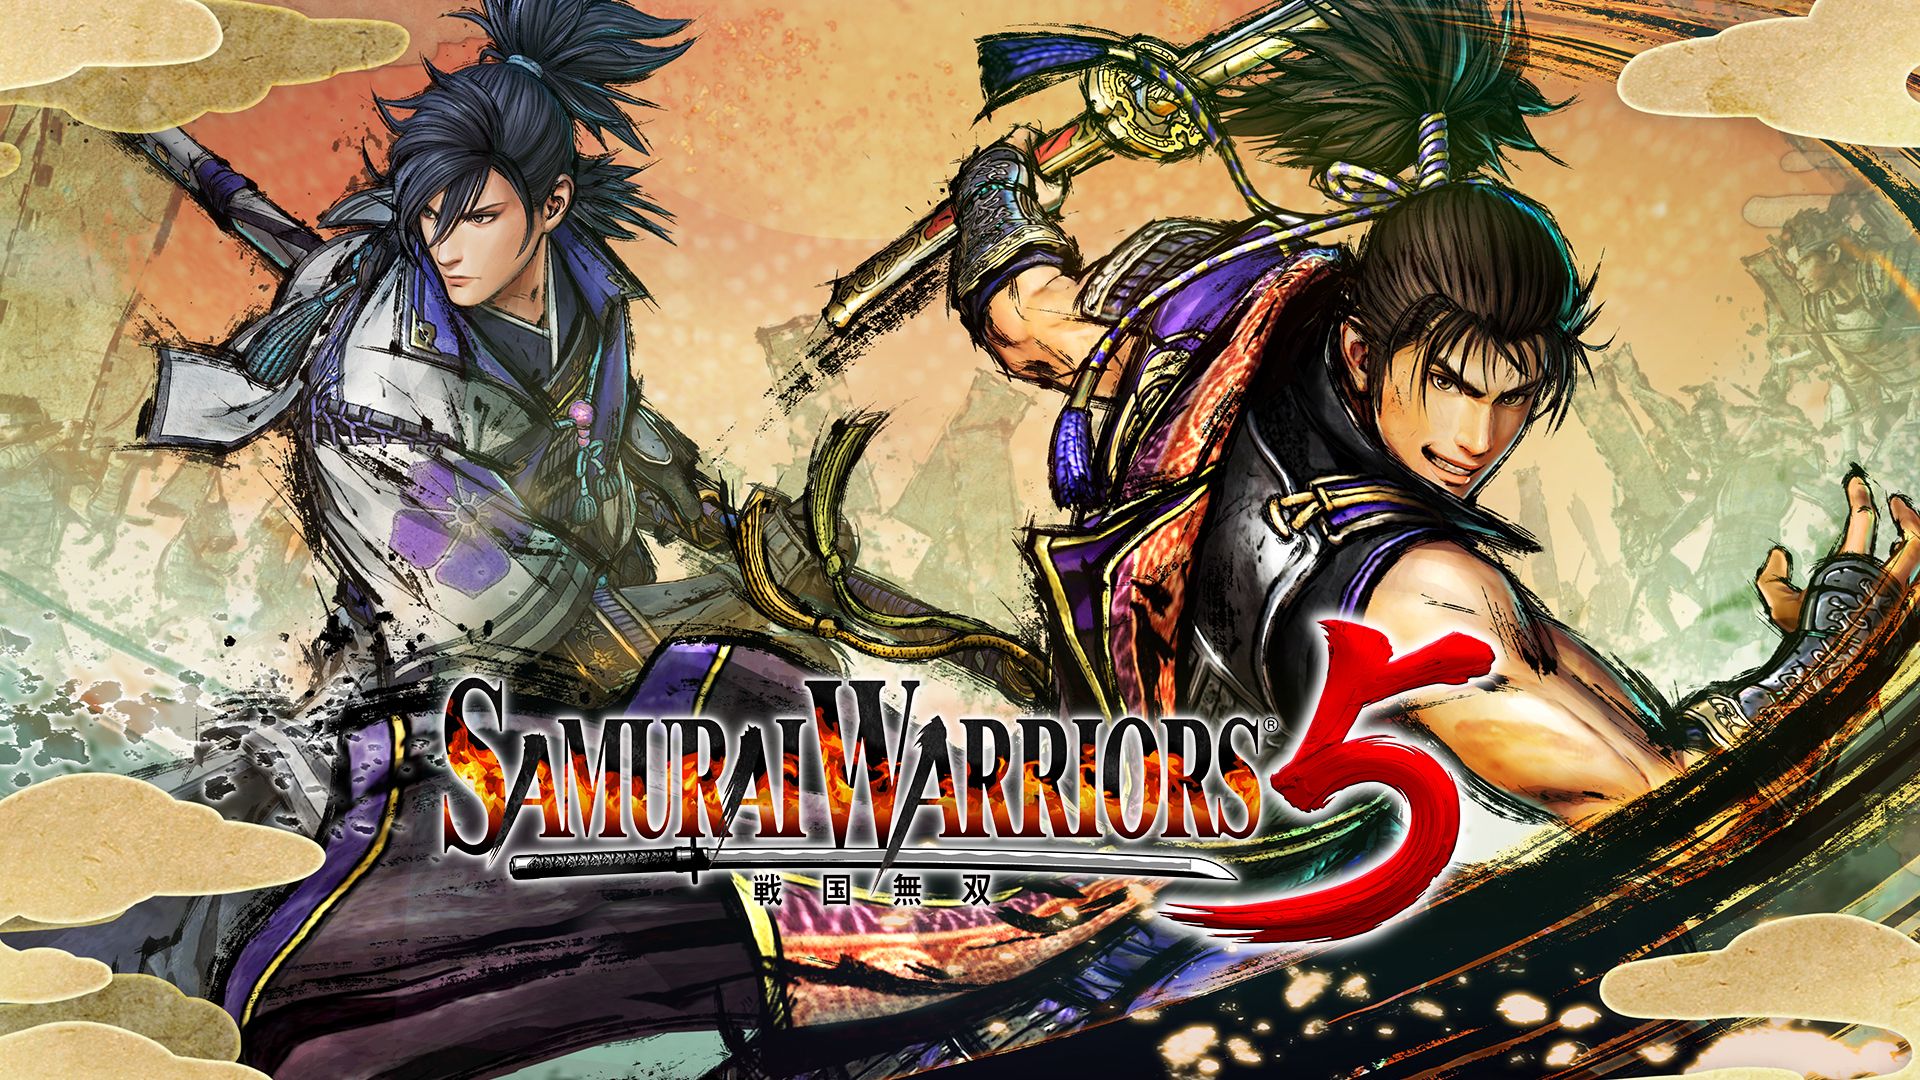 SAMURAI WARRIORS 5 for Nintendo Switch Game Details